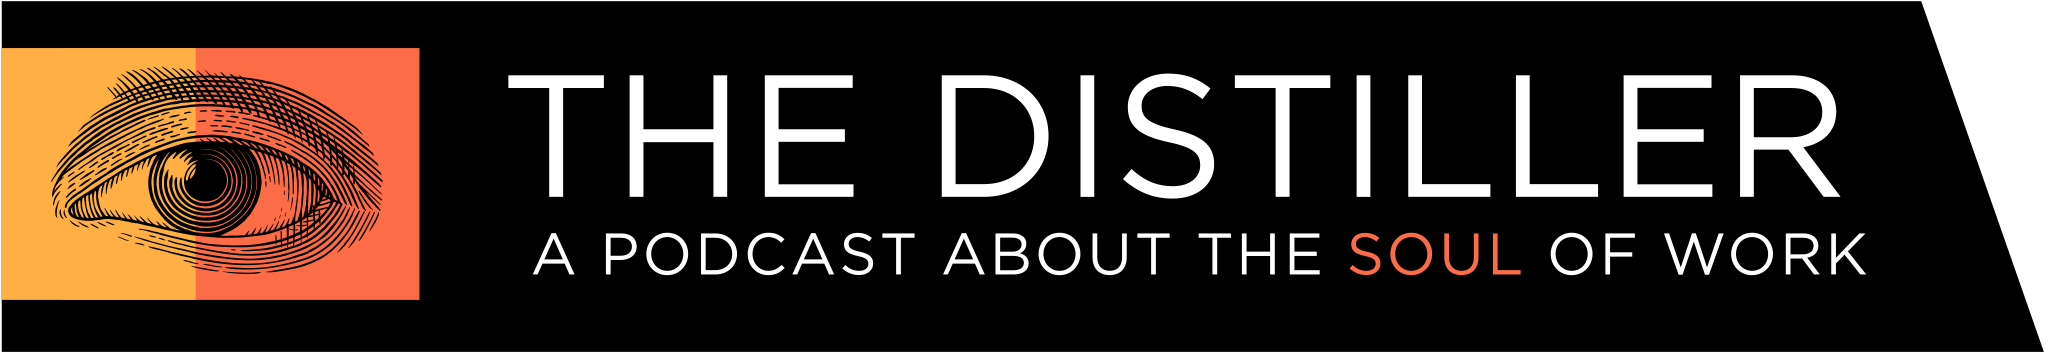 The Distiller Podcast logo